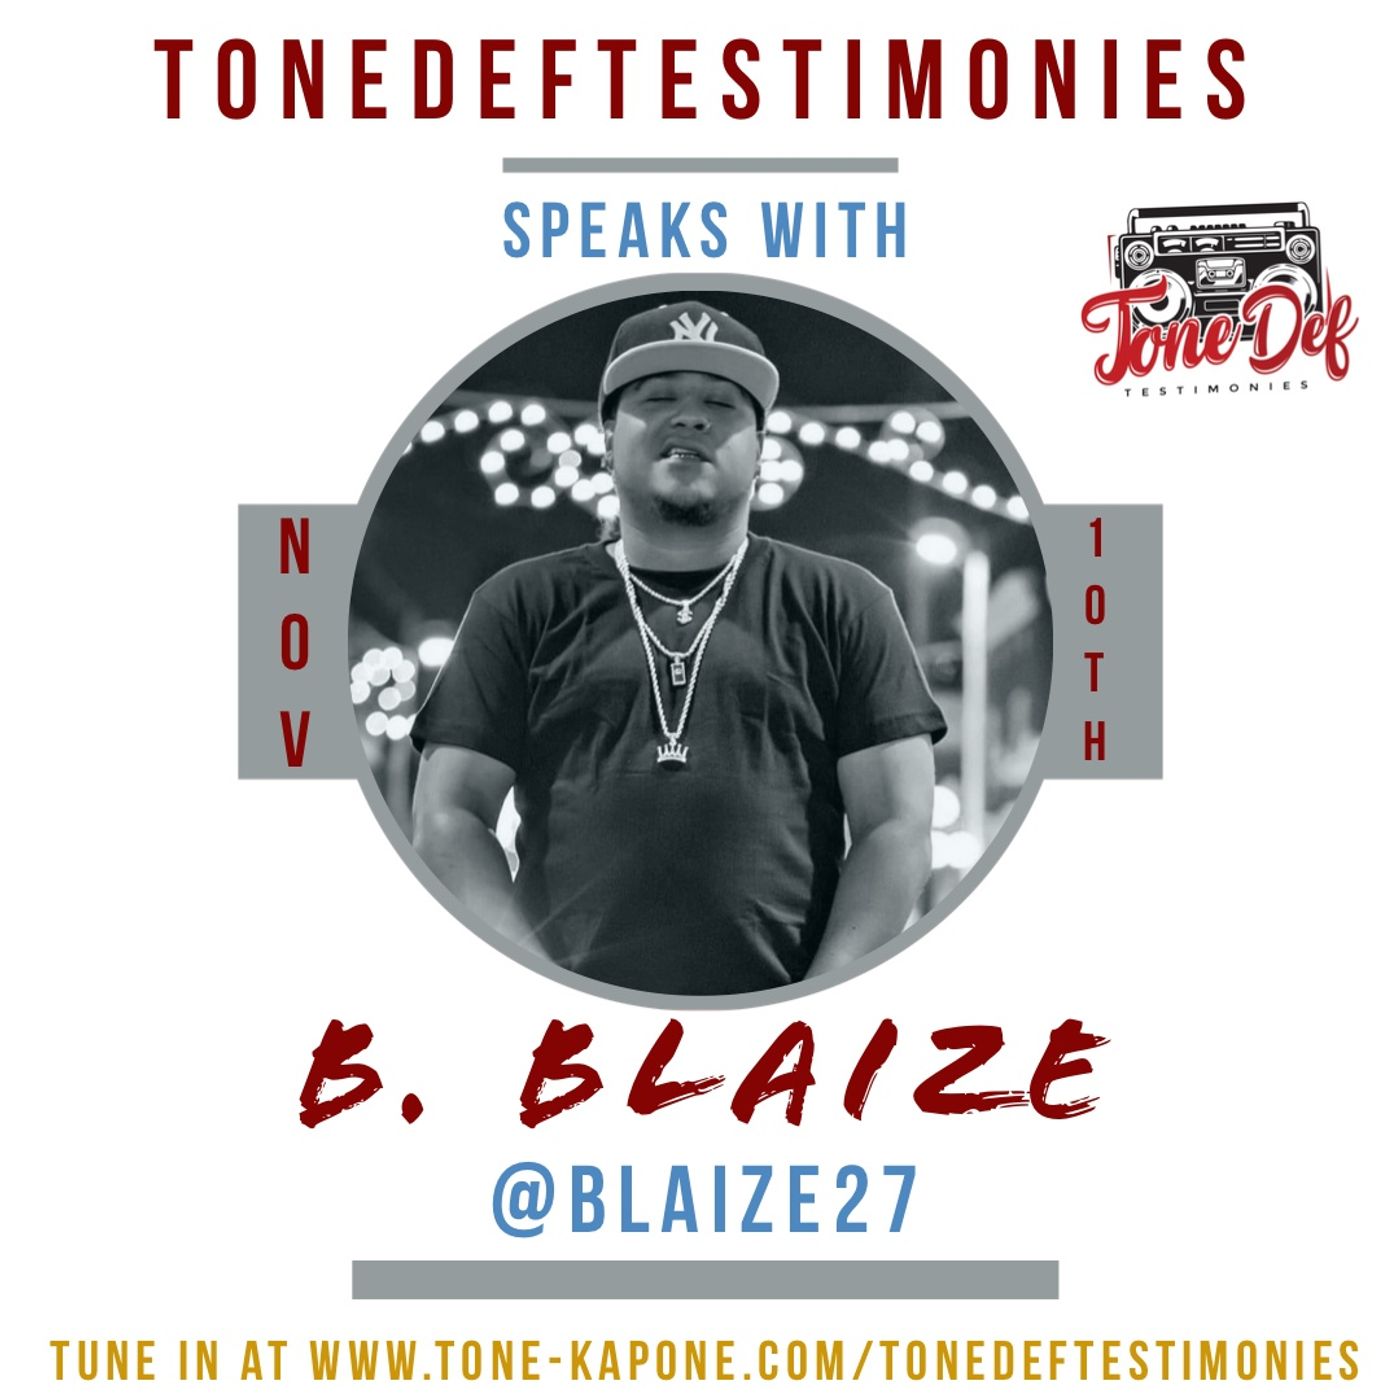 B. BLAIZE ON THE TONEDEFTESTIMONIES